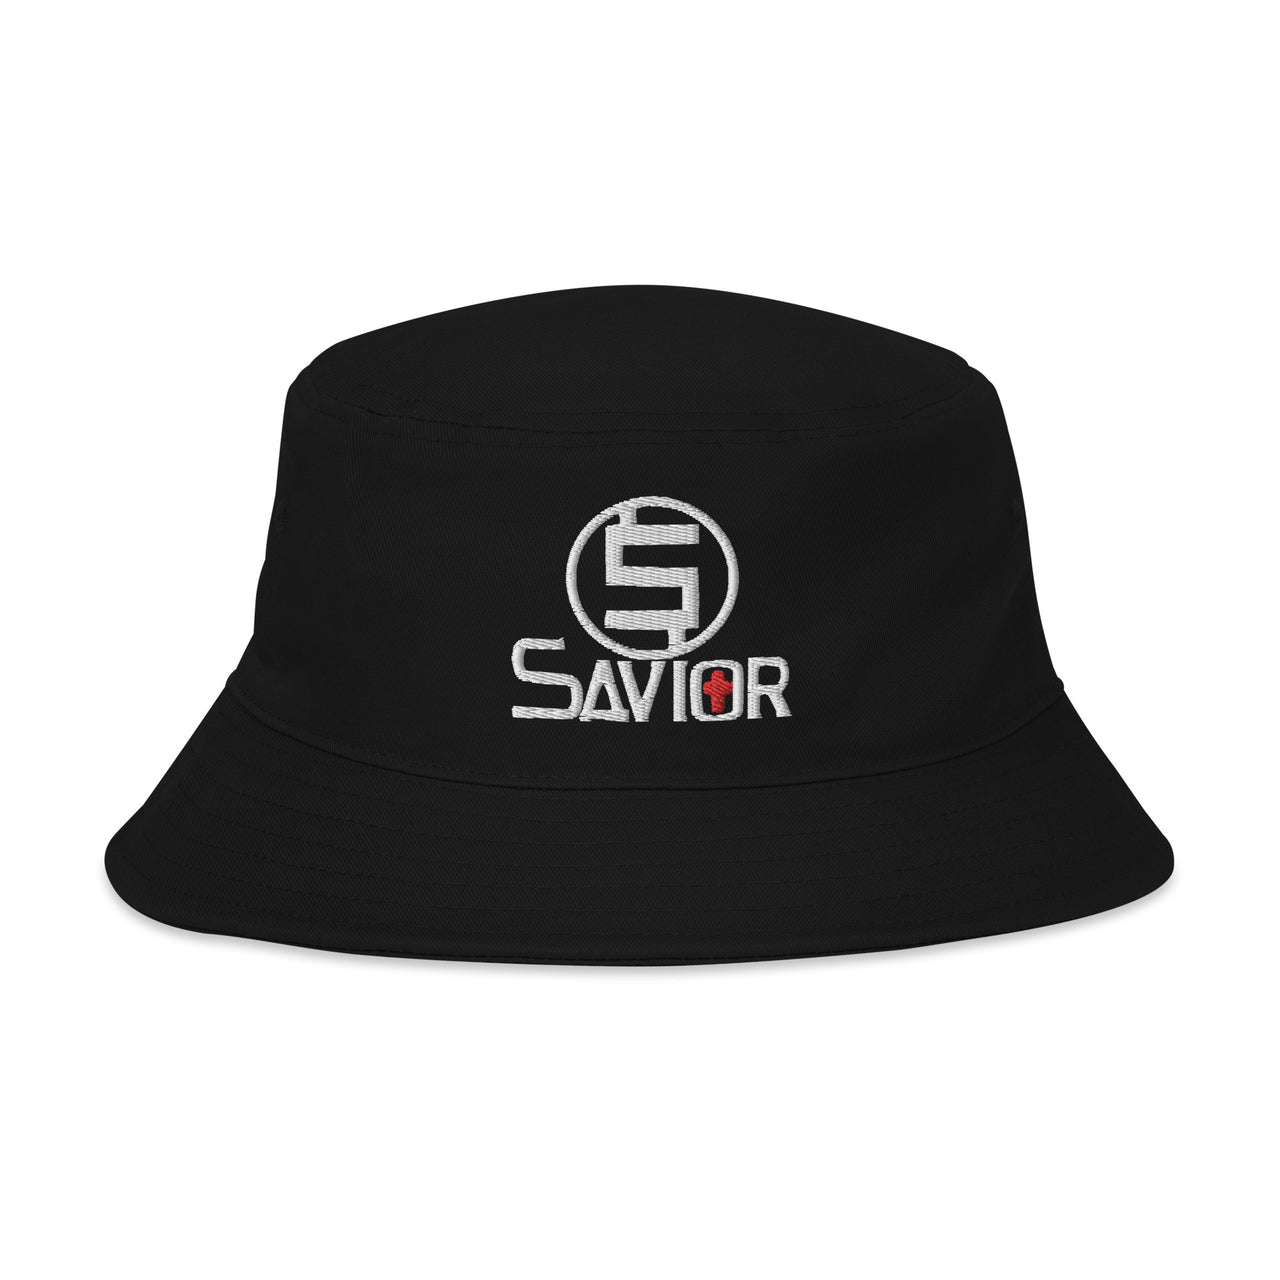 Savior Mark bucket hat